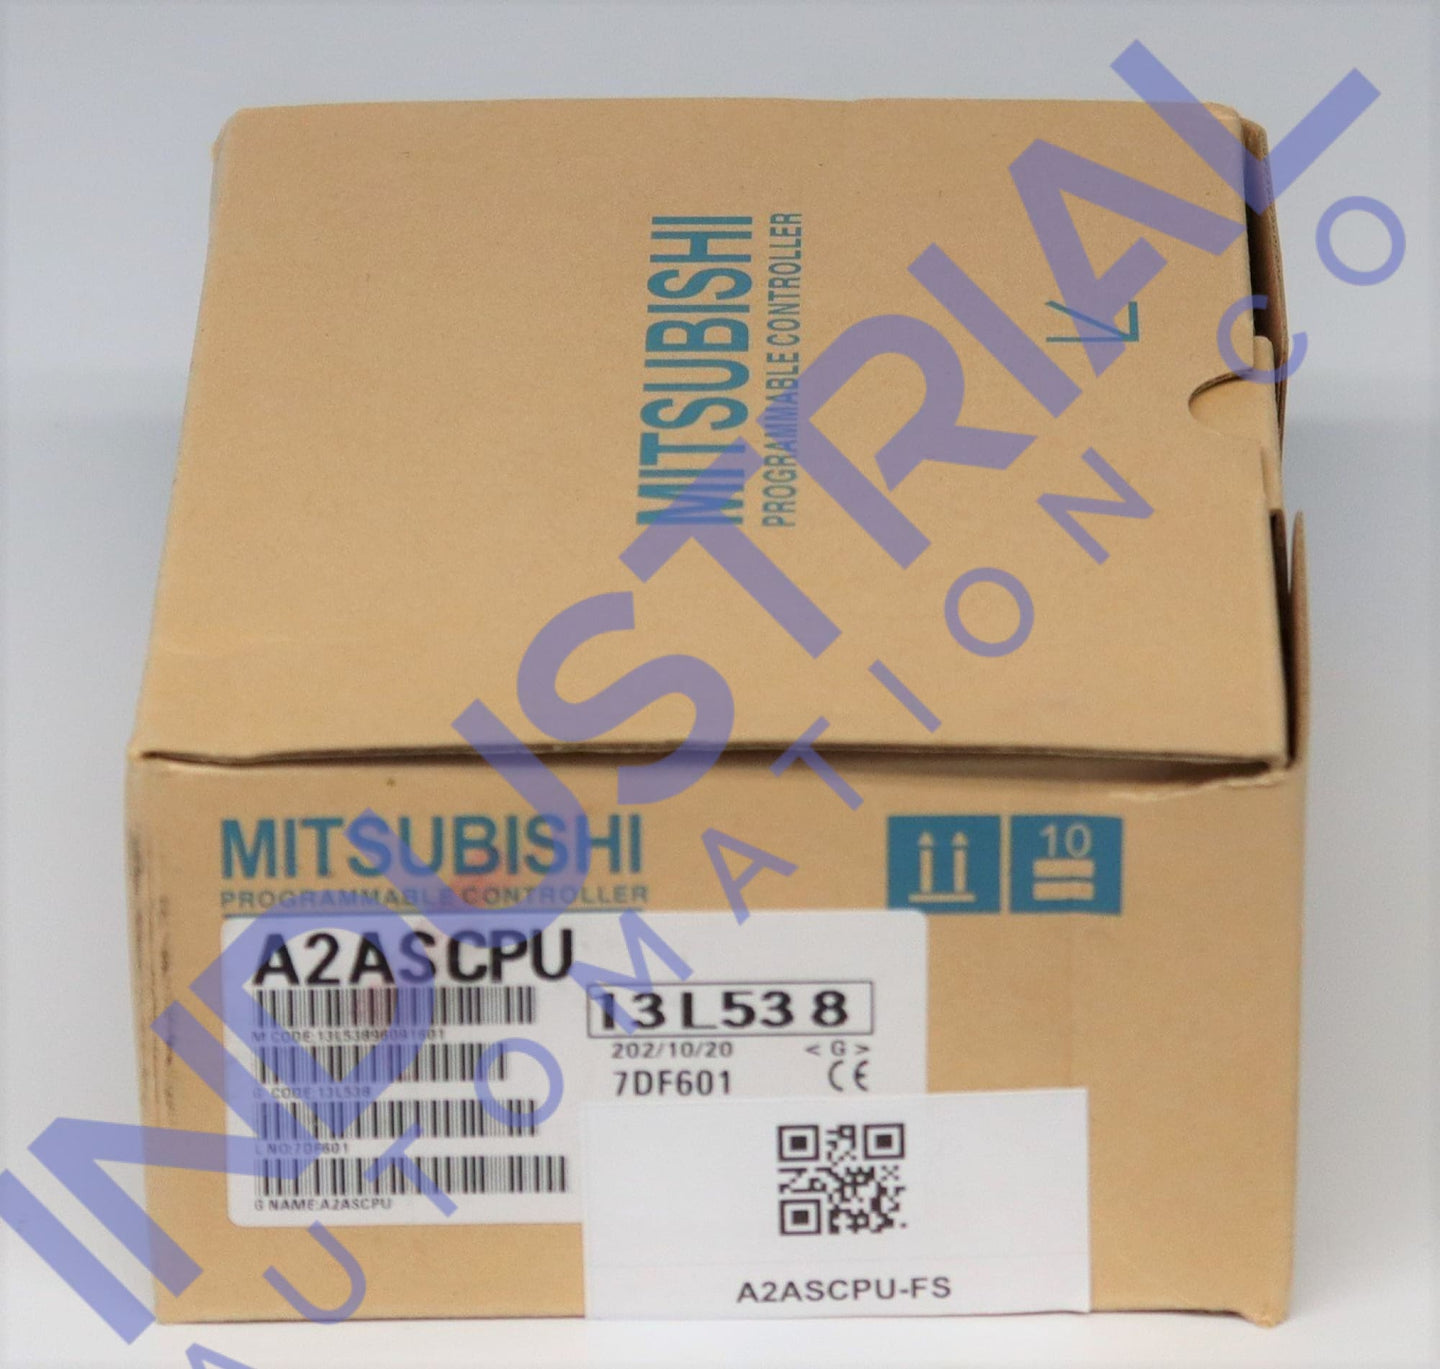 Mitsubishi A2Ascpu